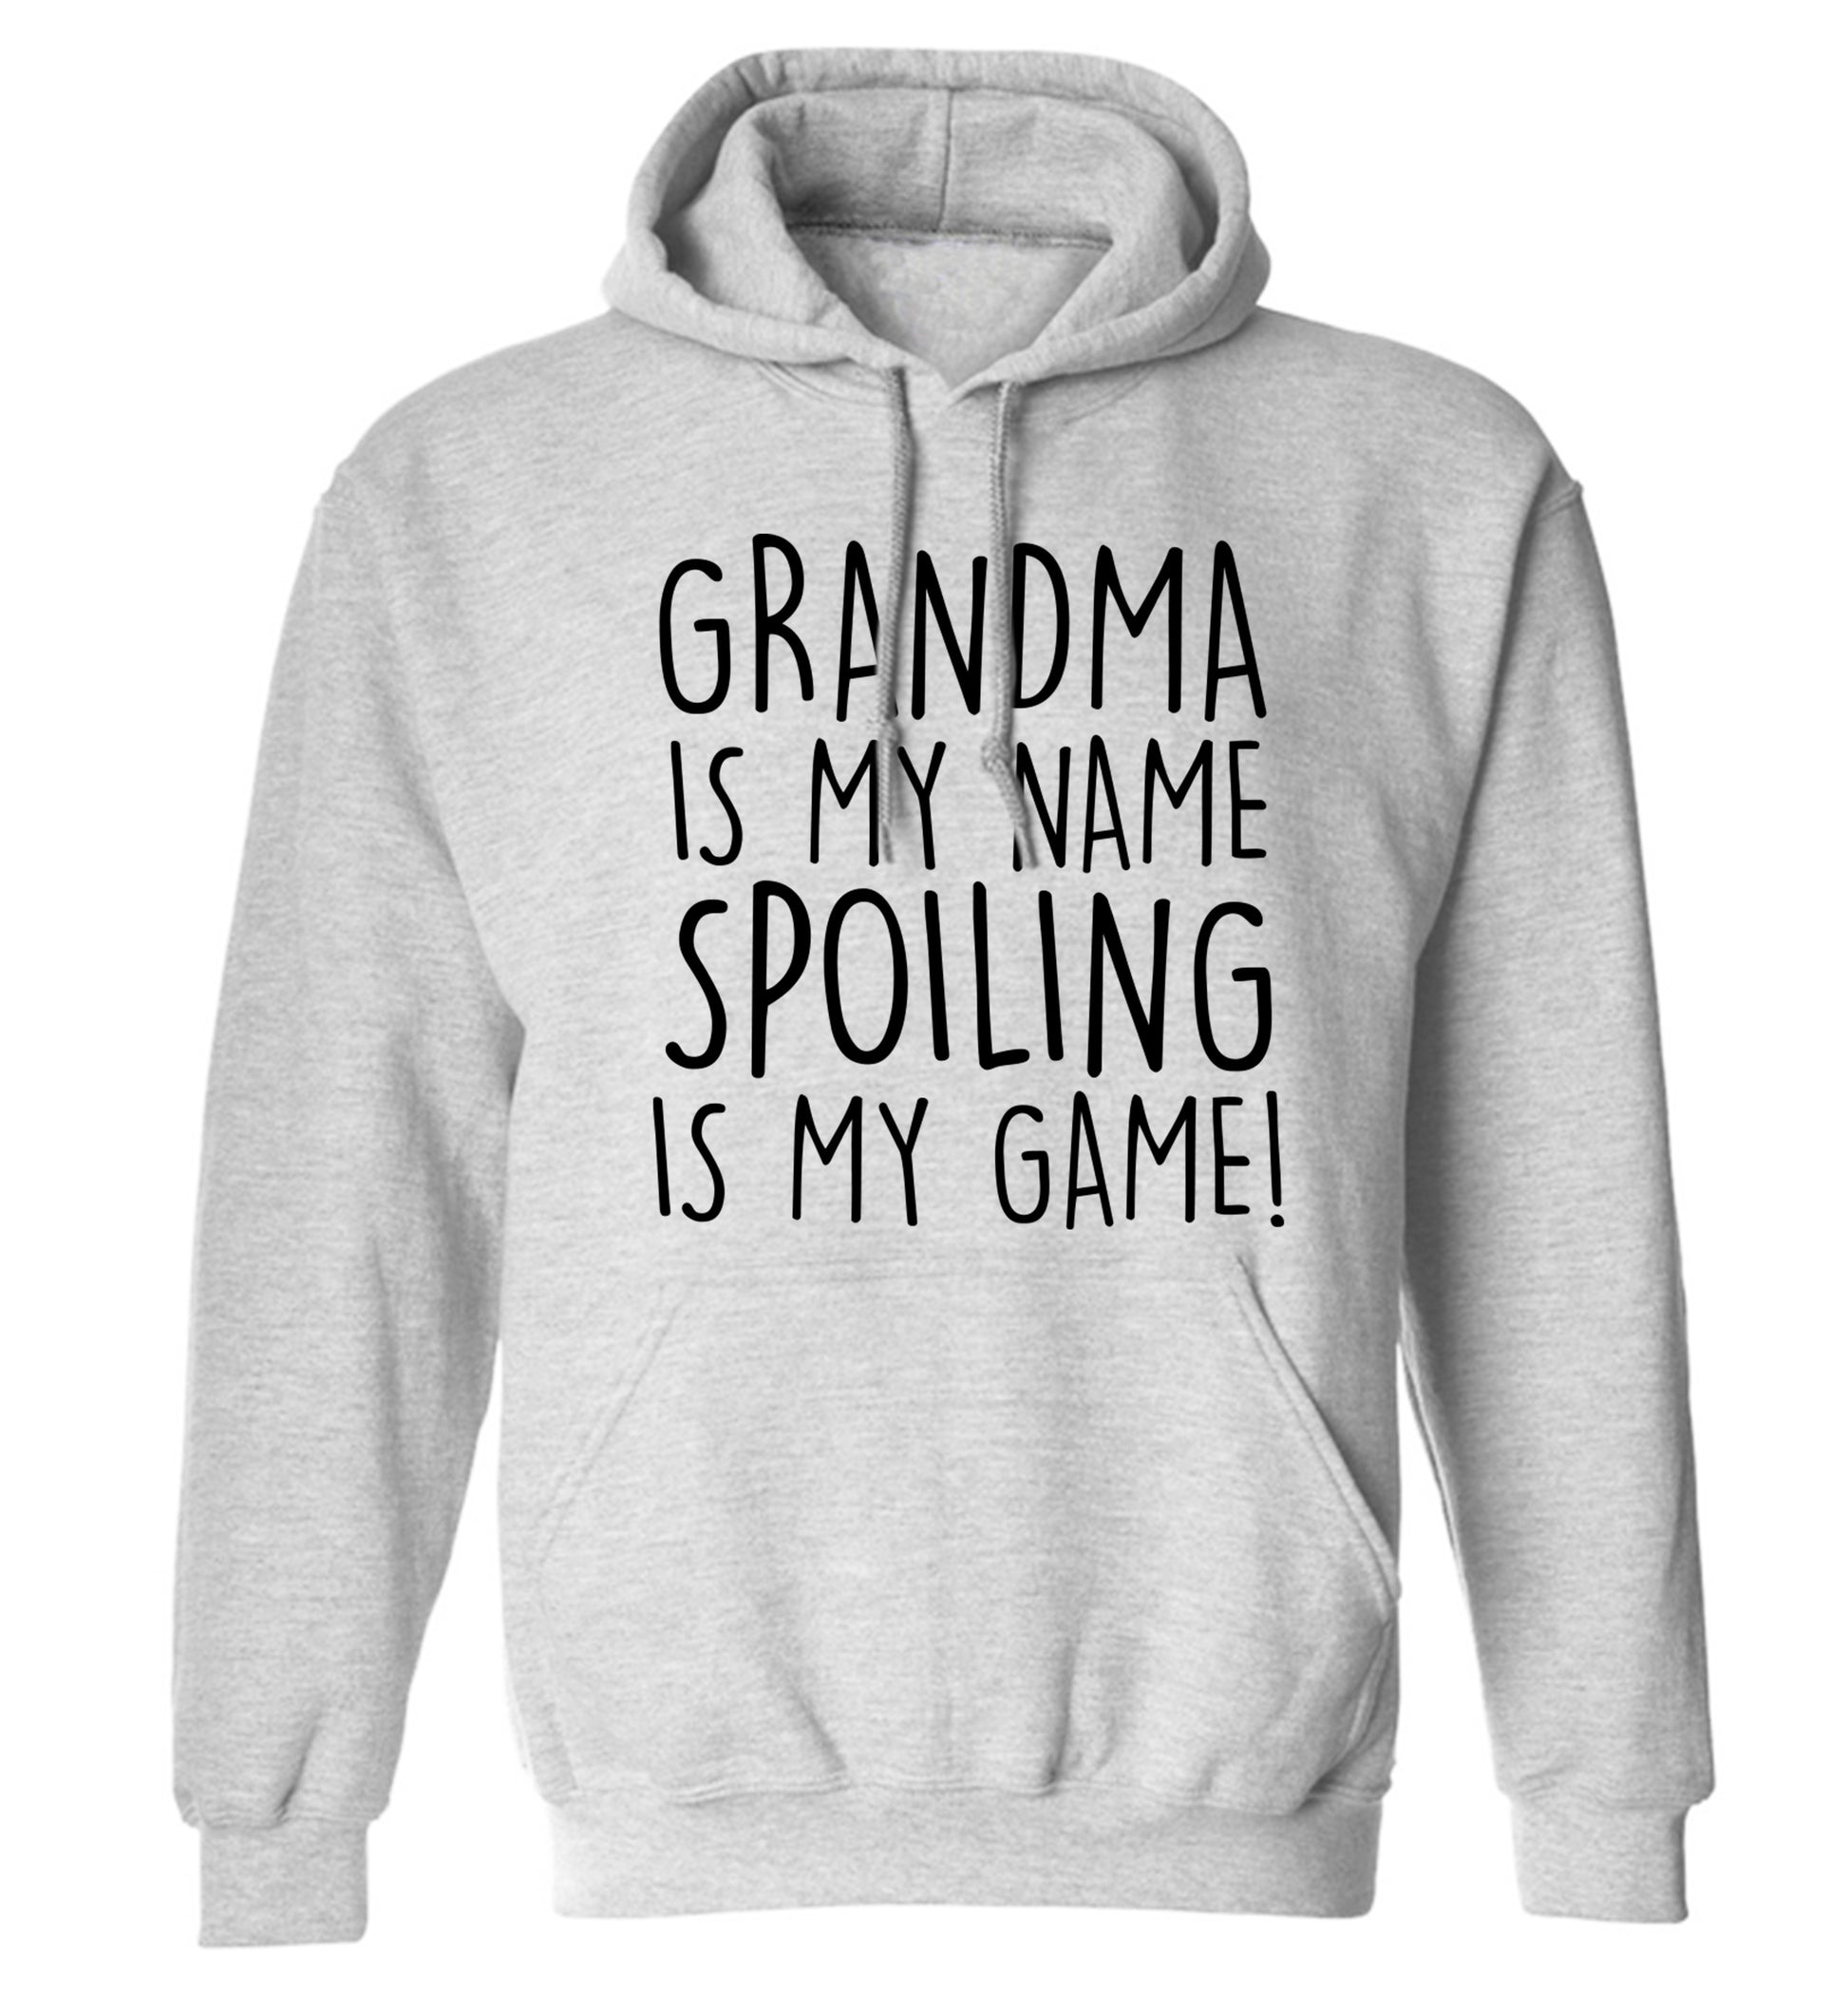 Grandma is my name, spoiling is my game adults unisex grey hoodie 2XL